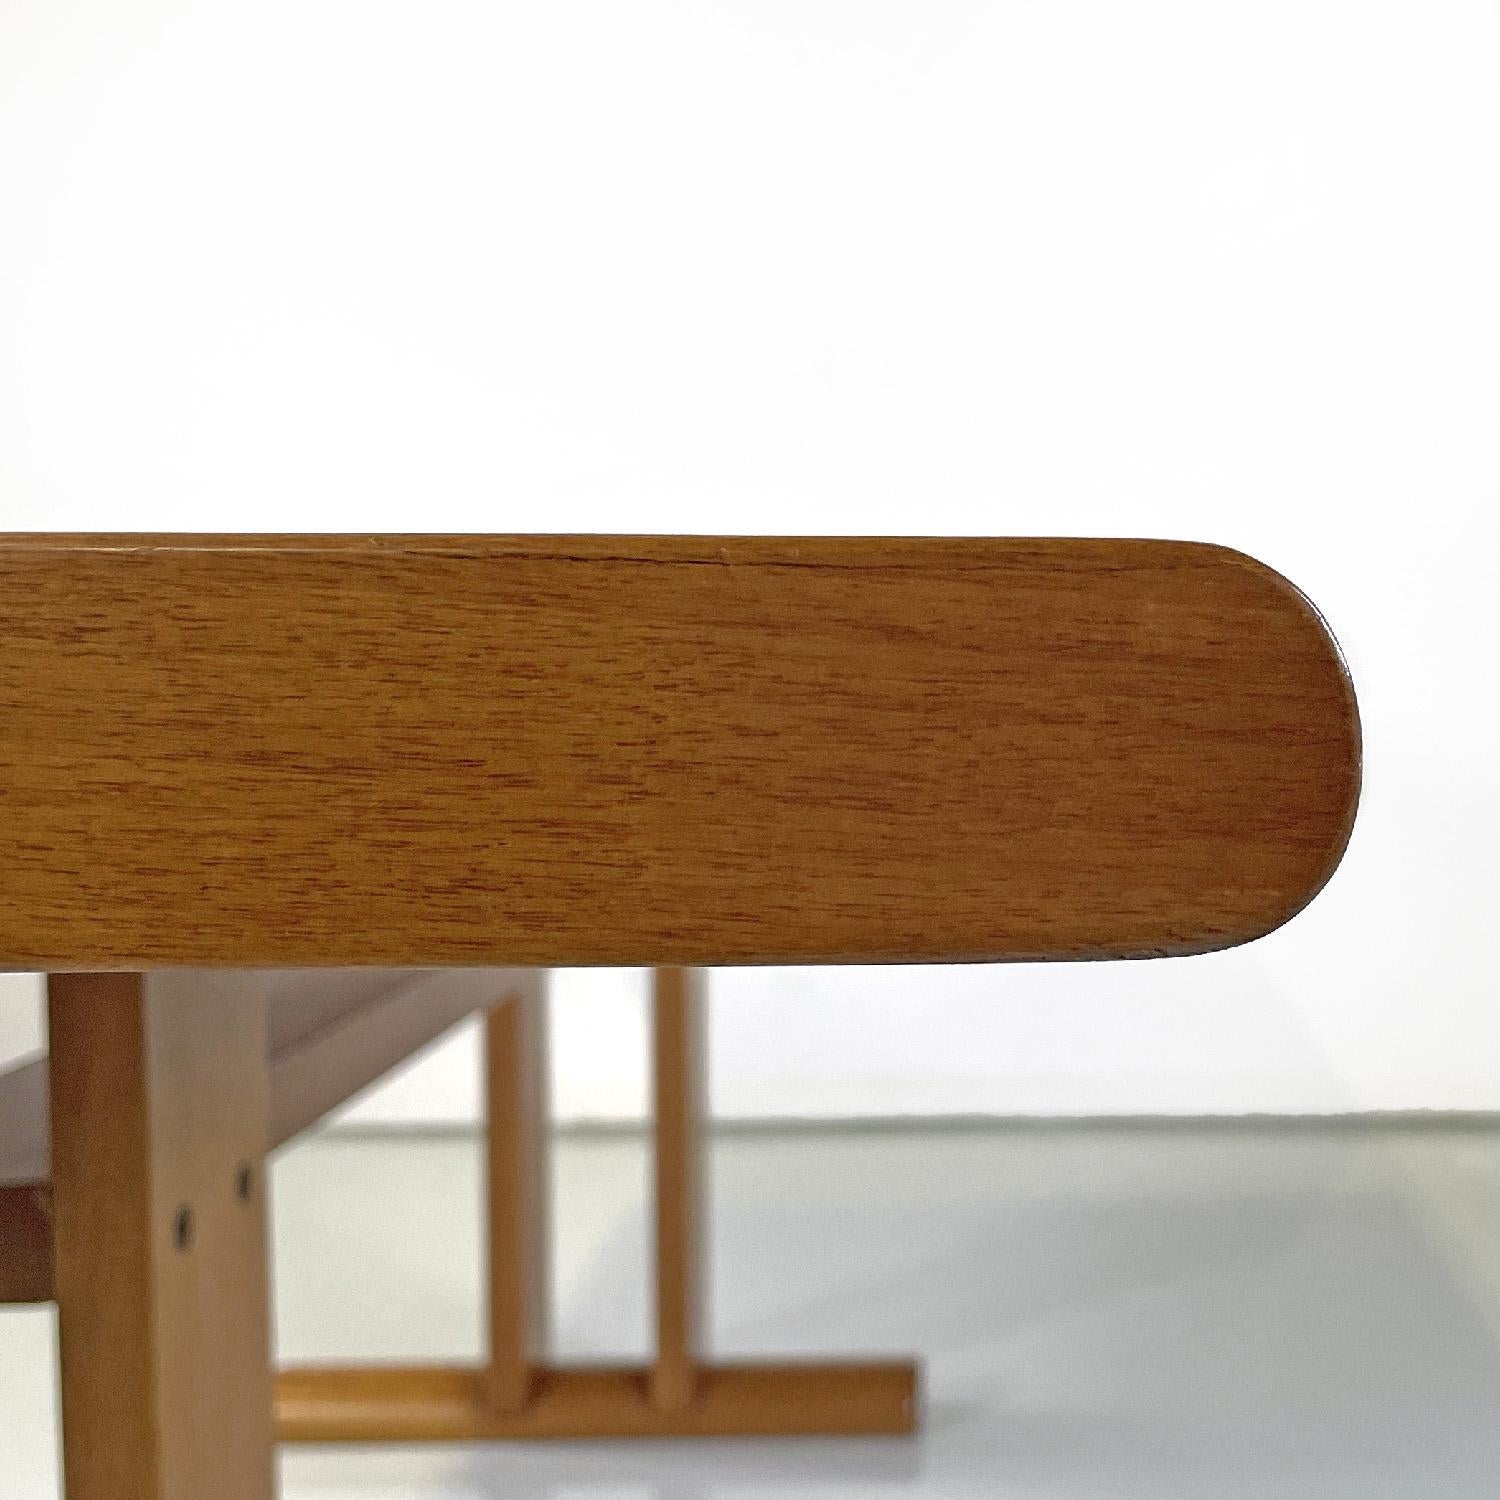 Italian modern rectangular wooden dining table, 1980s For Sale 1